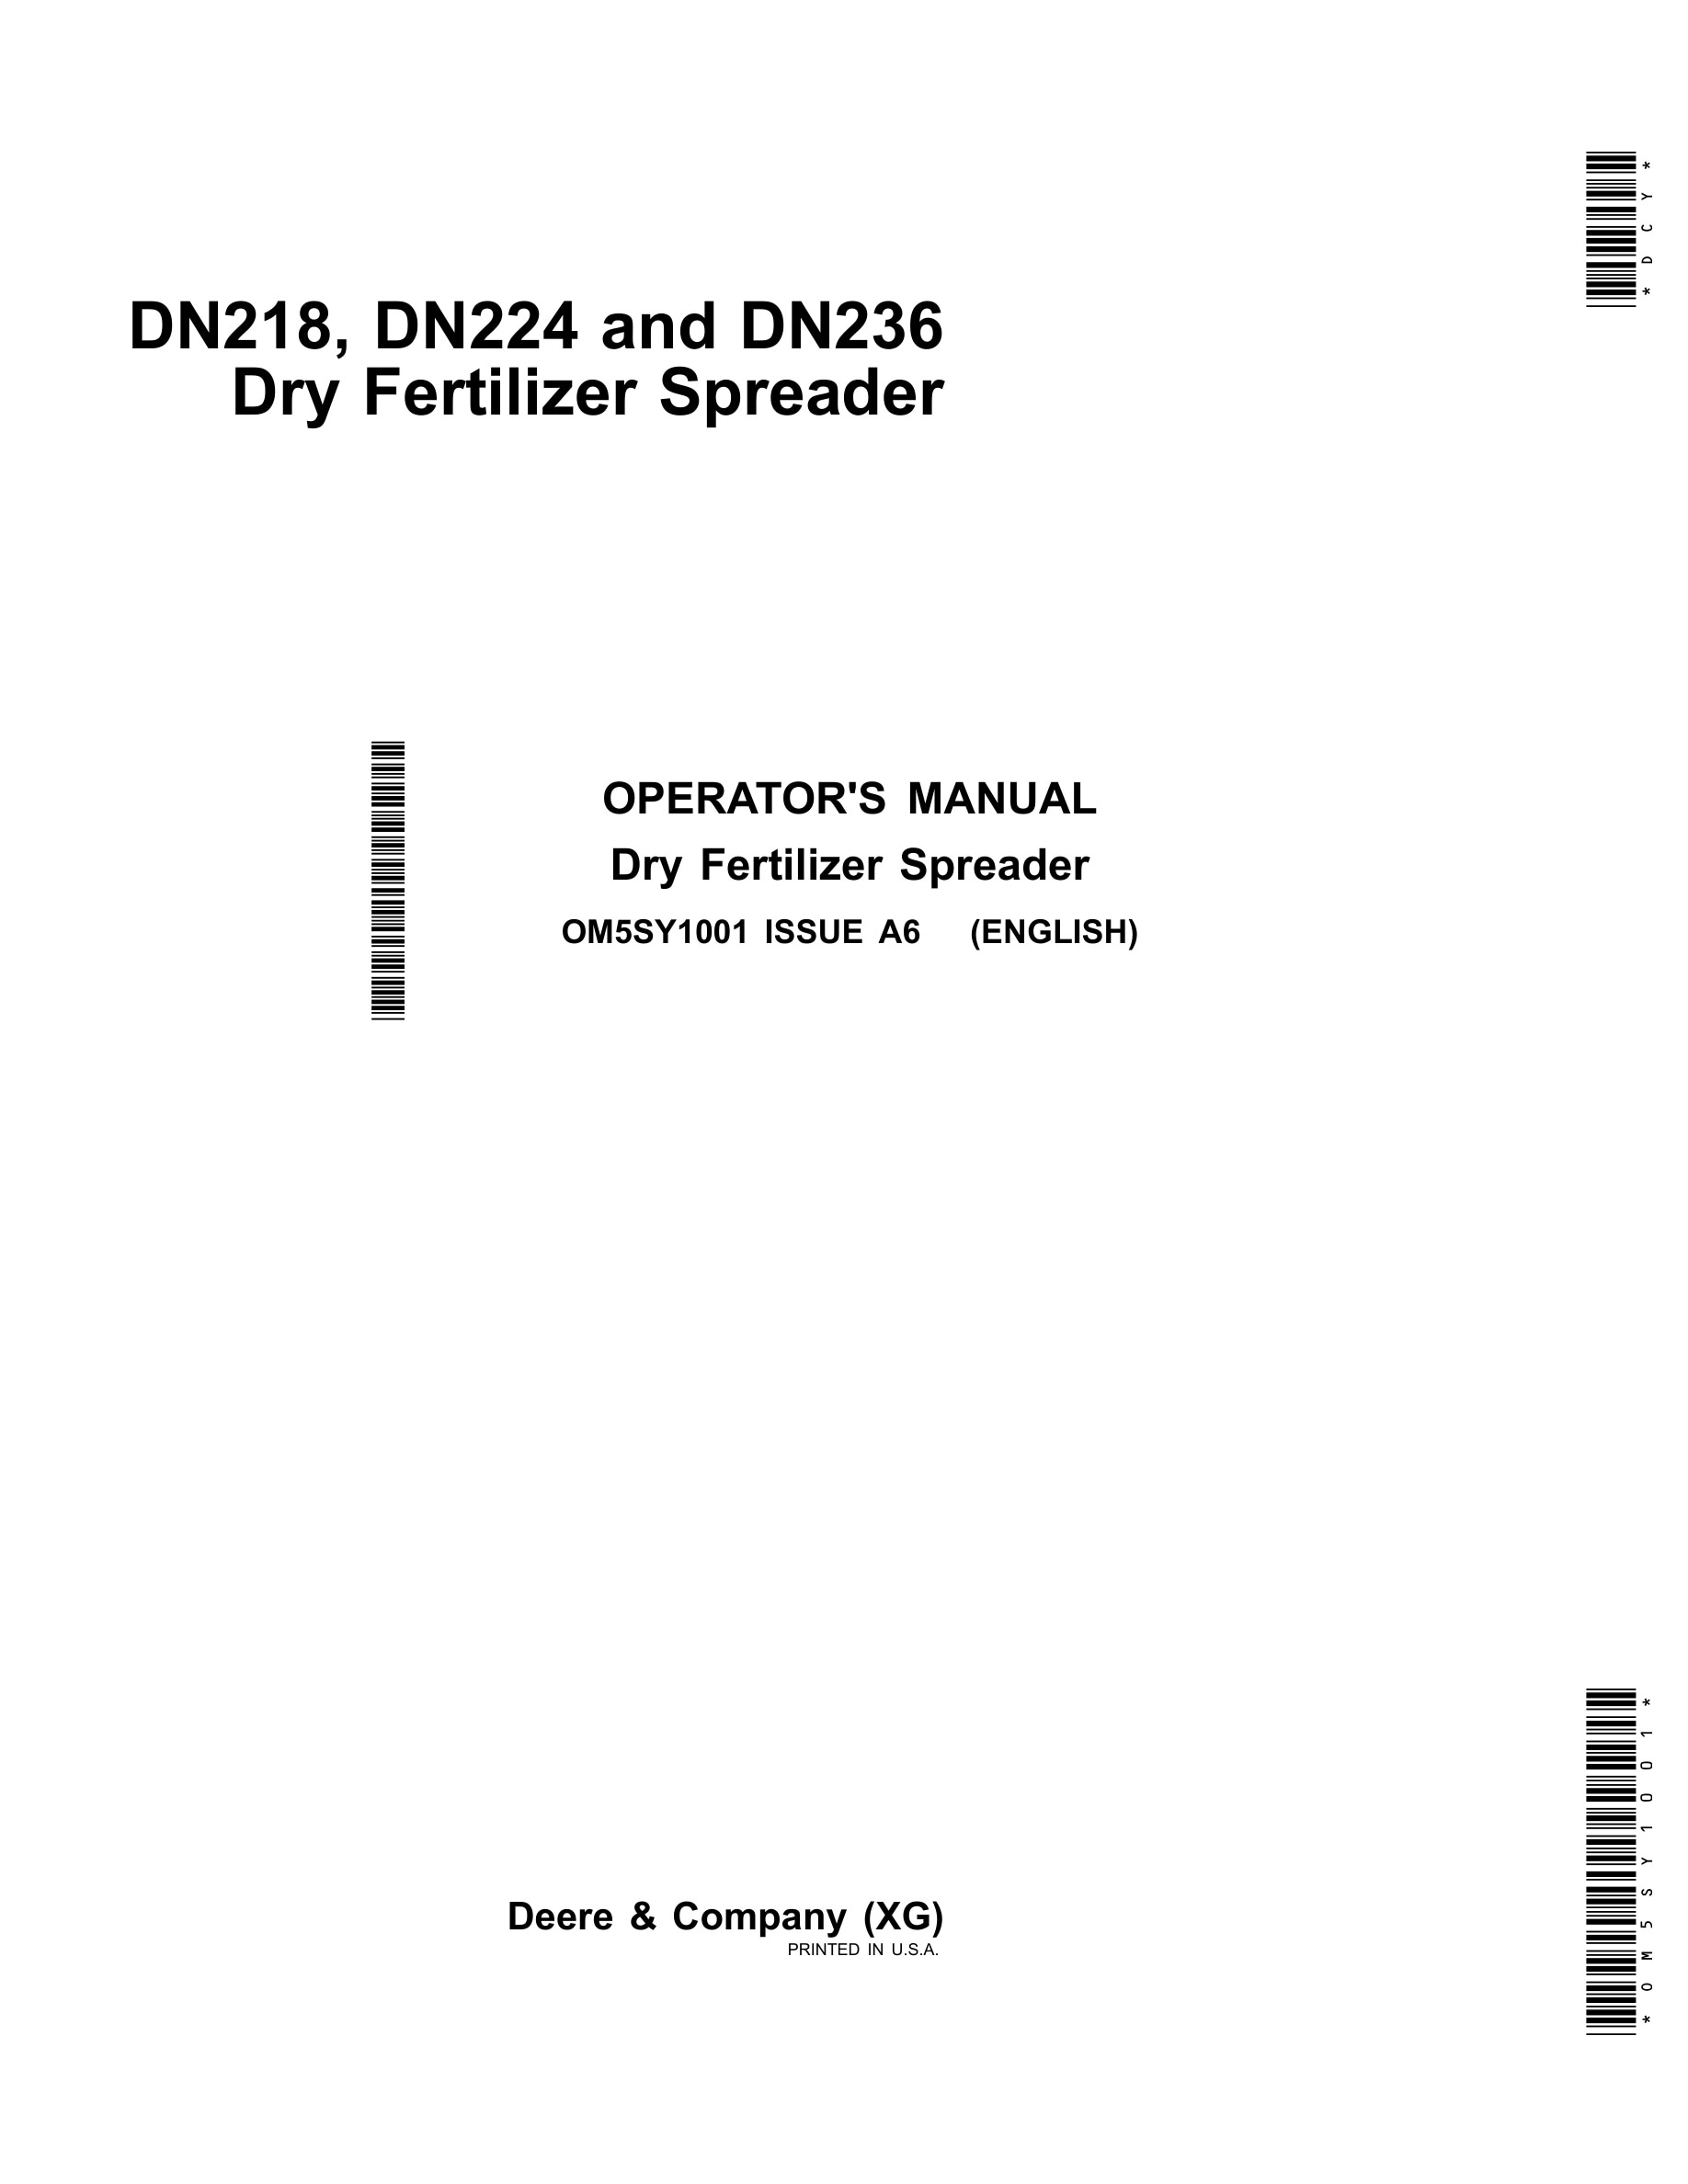 John Deere DN218, DN224 and DN236 Dry Fertilizer Spreader Operator Manual OM5SY1001-1